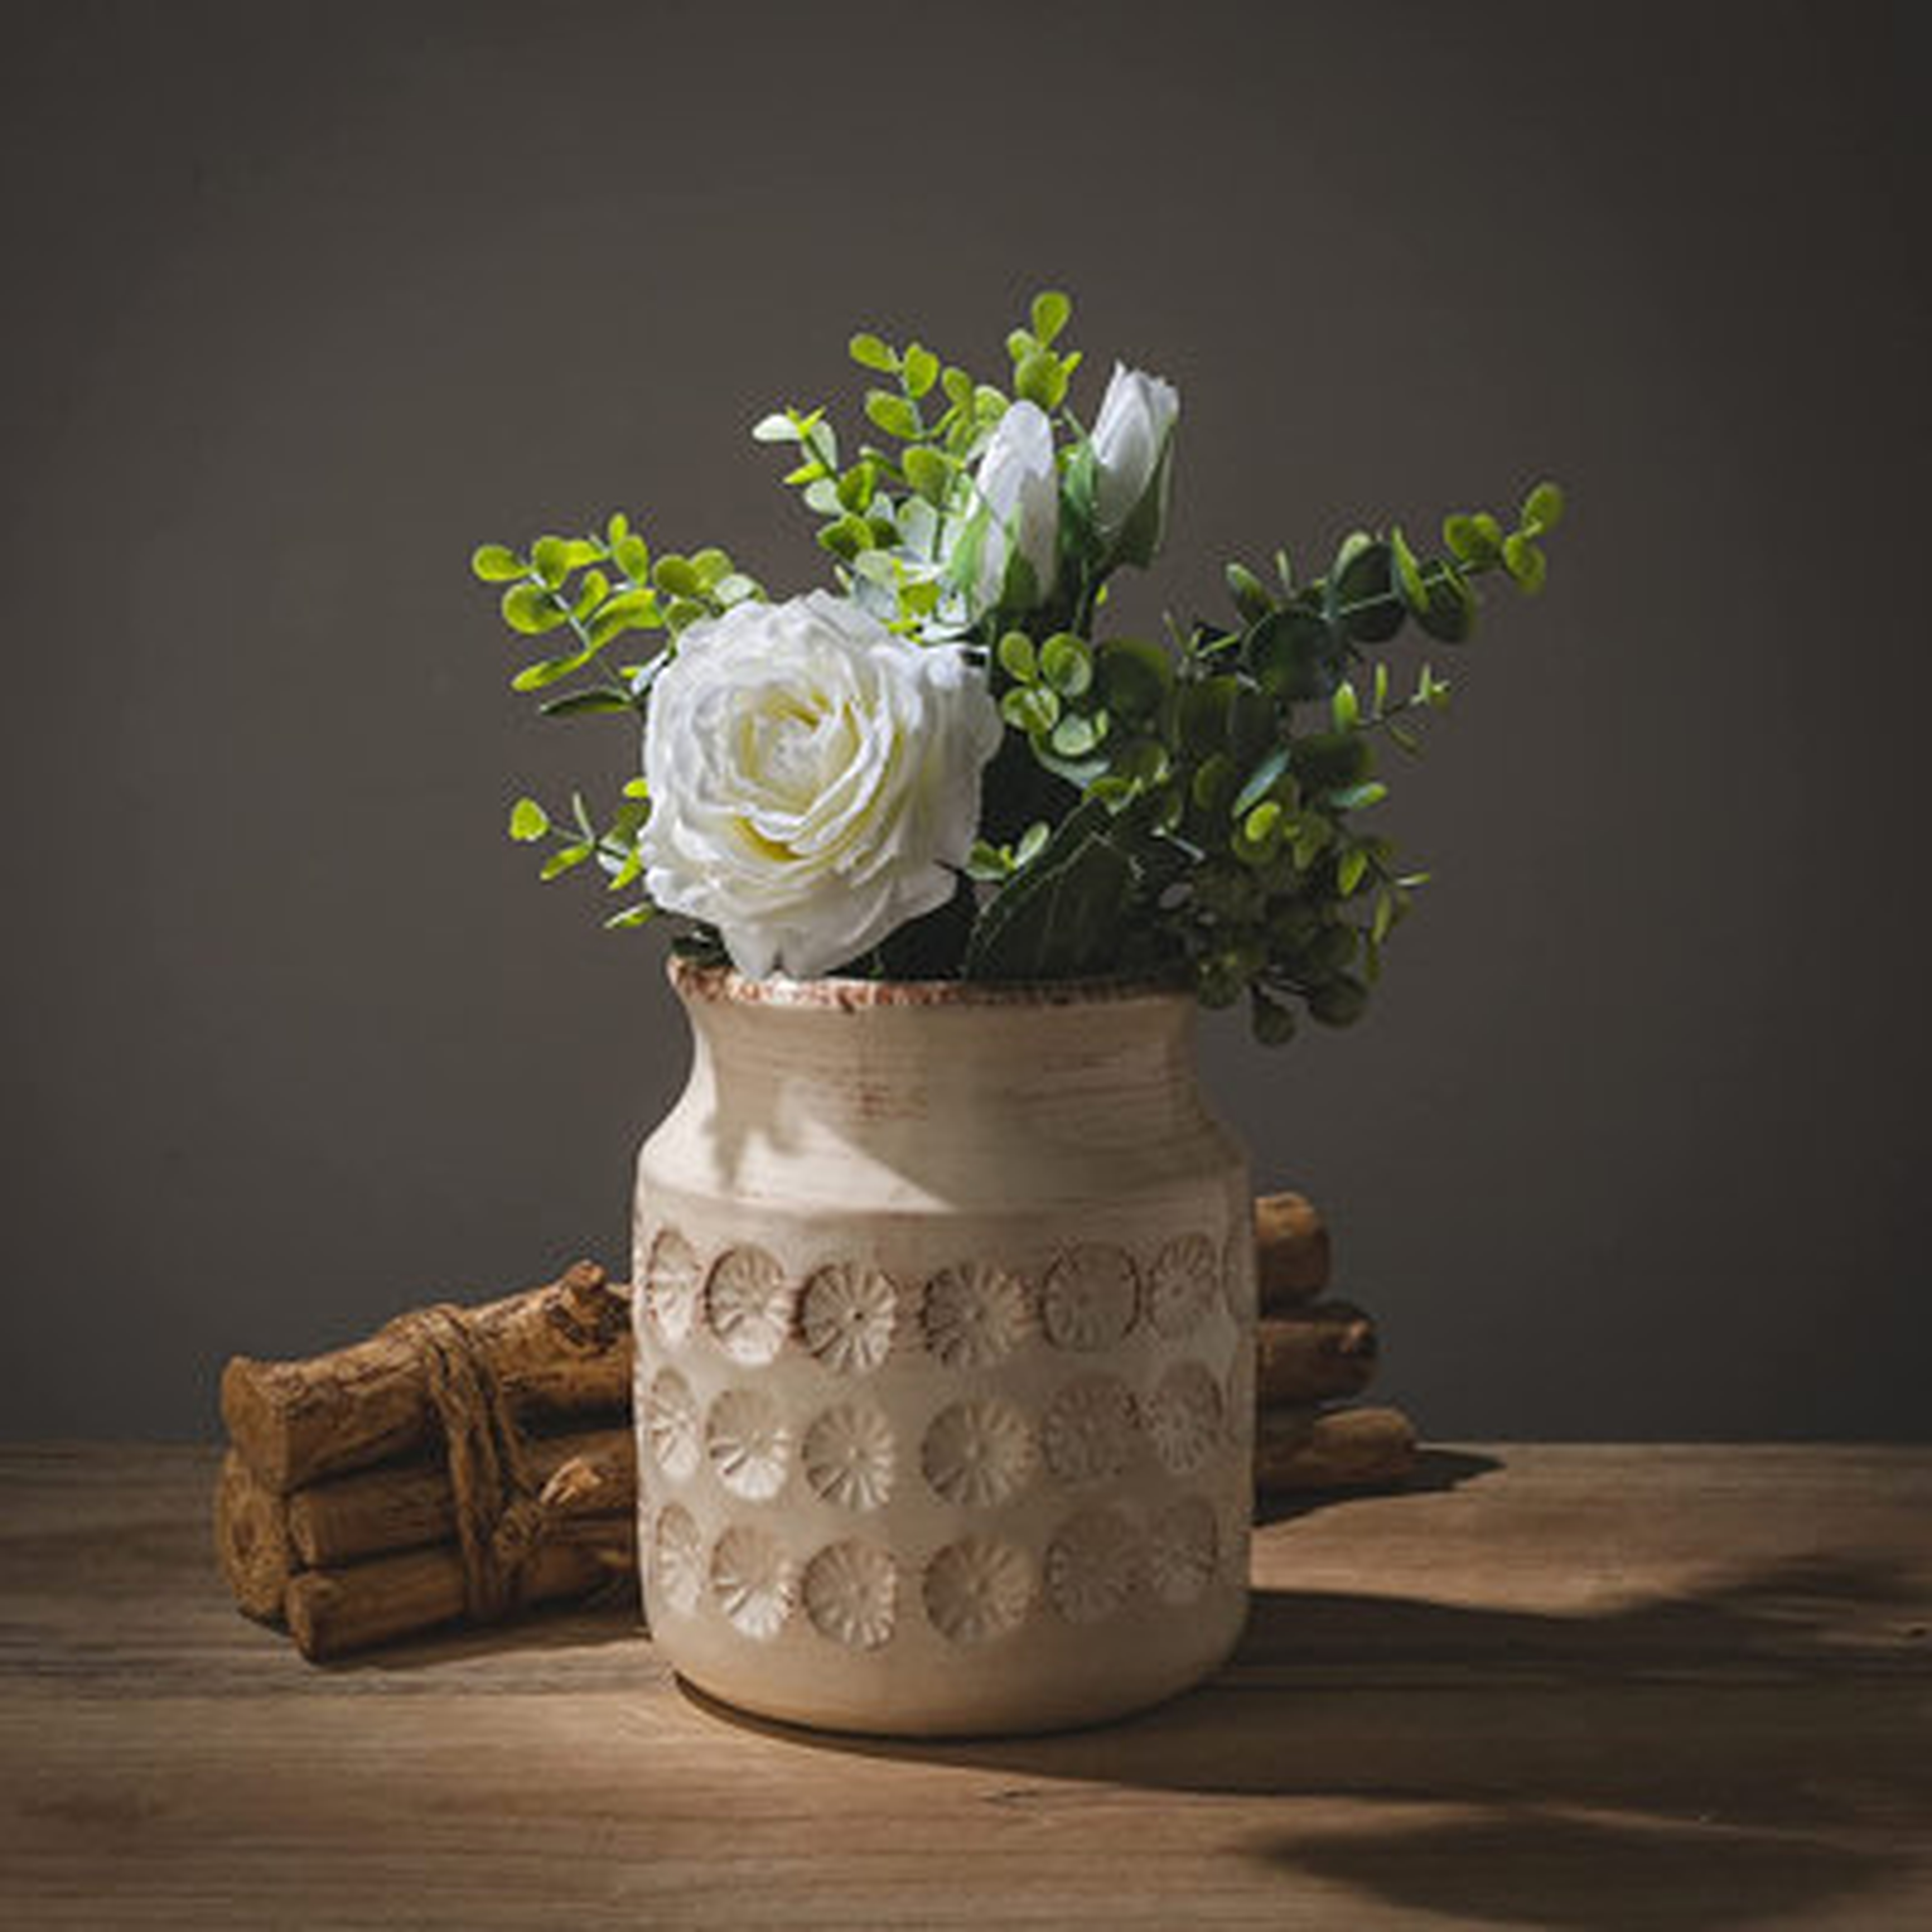 Flower Vases For Home Decor Rustic Ideal Shelf Decor Table Decor - Wayfair